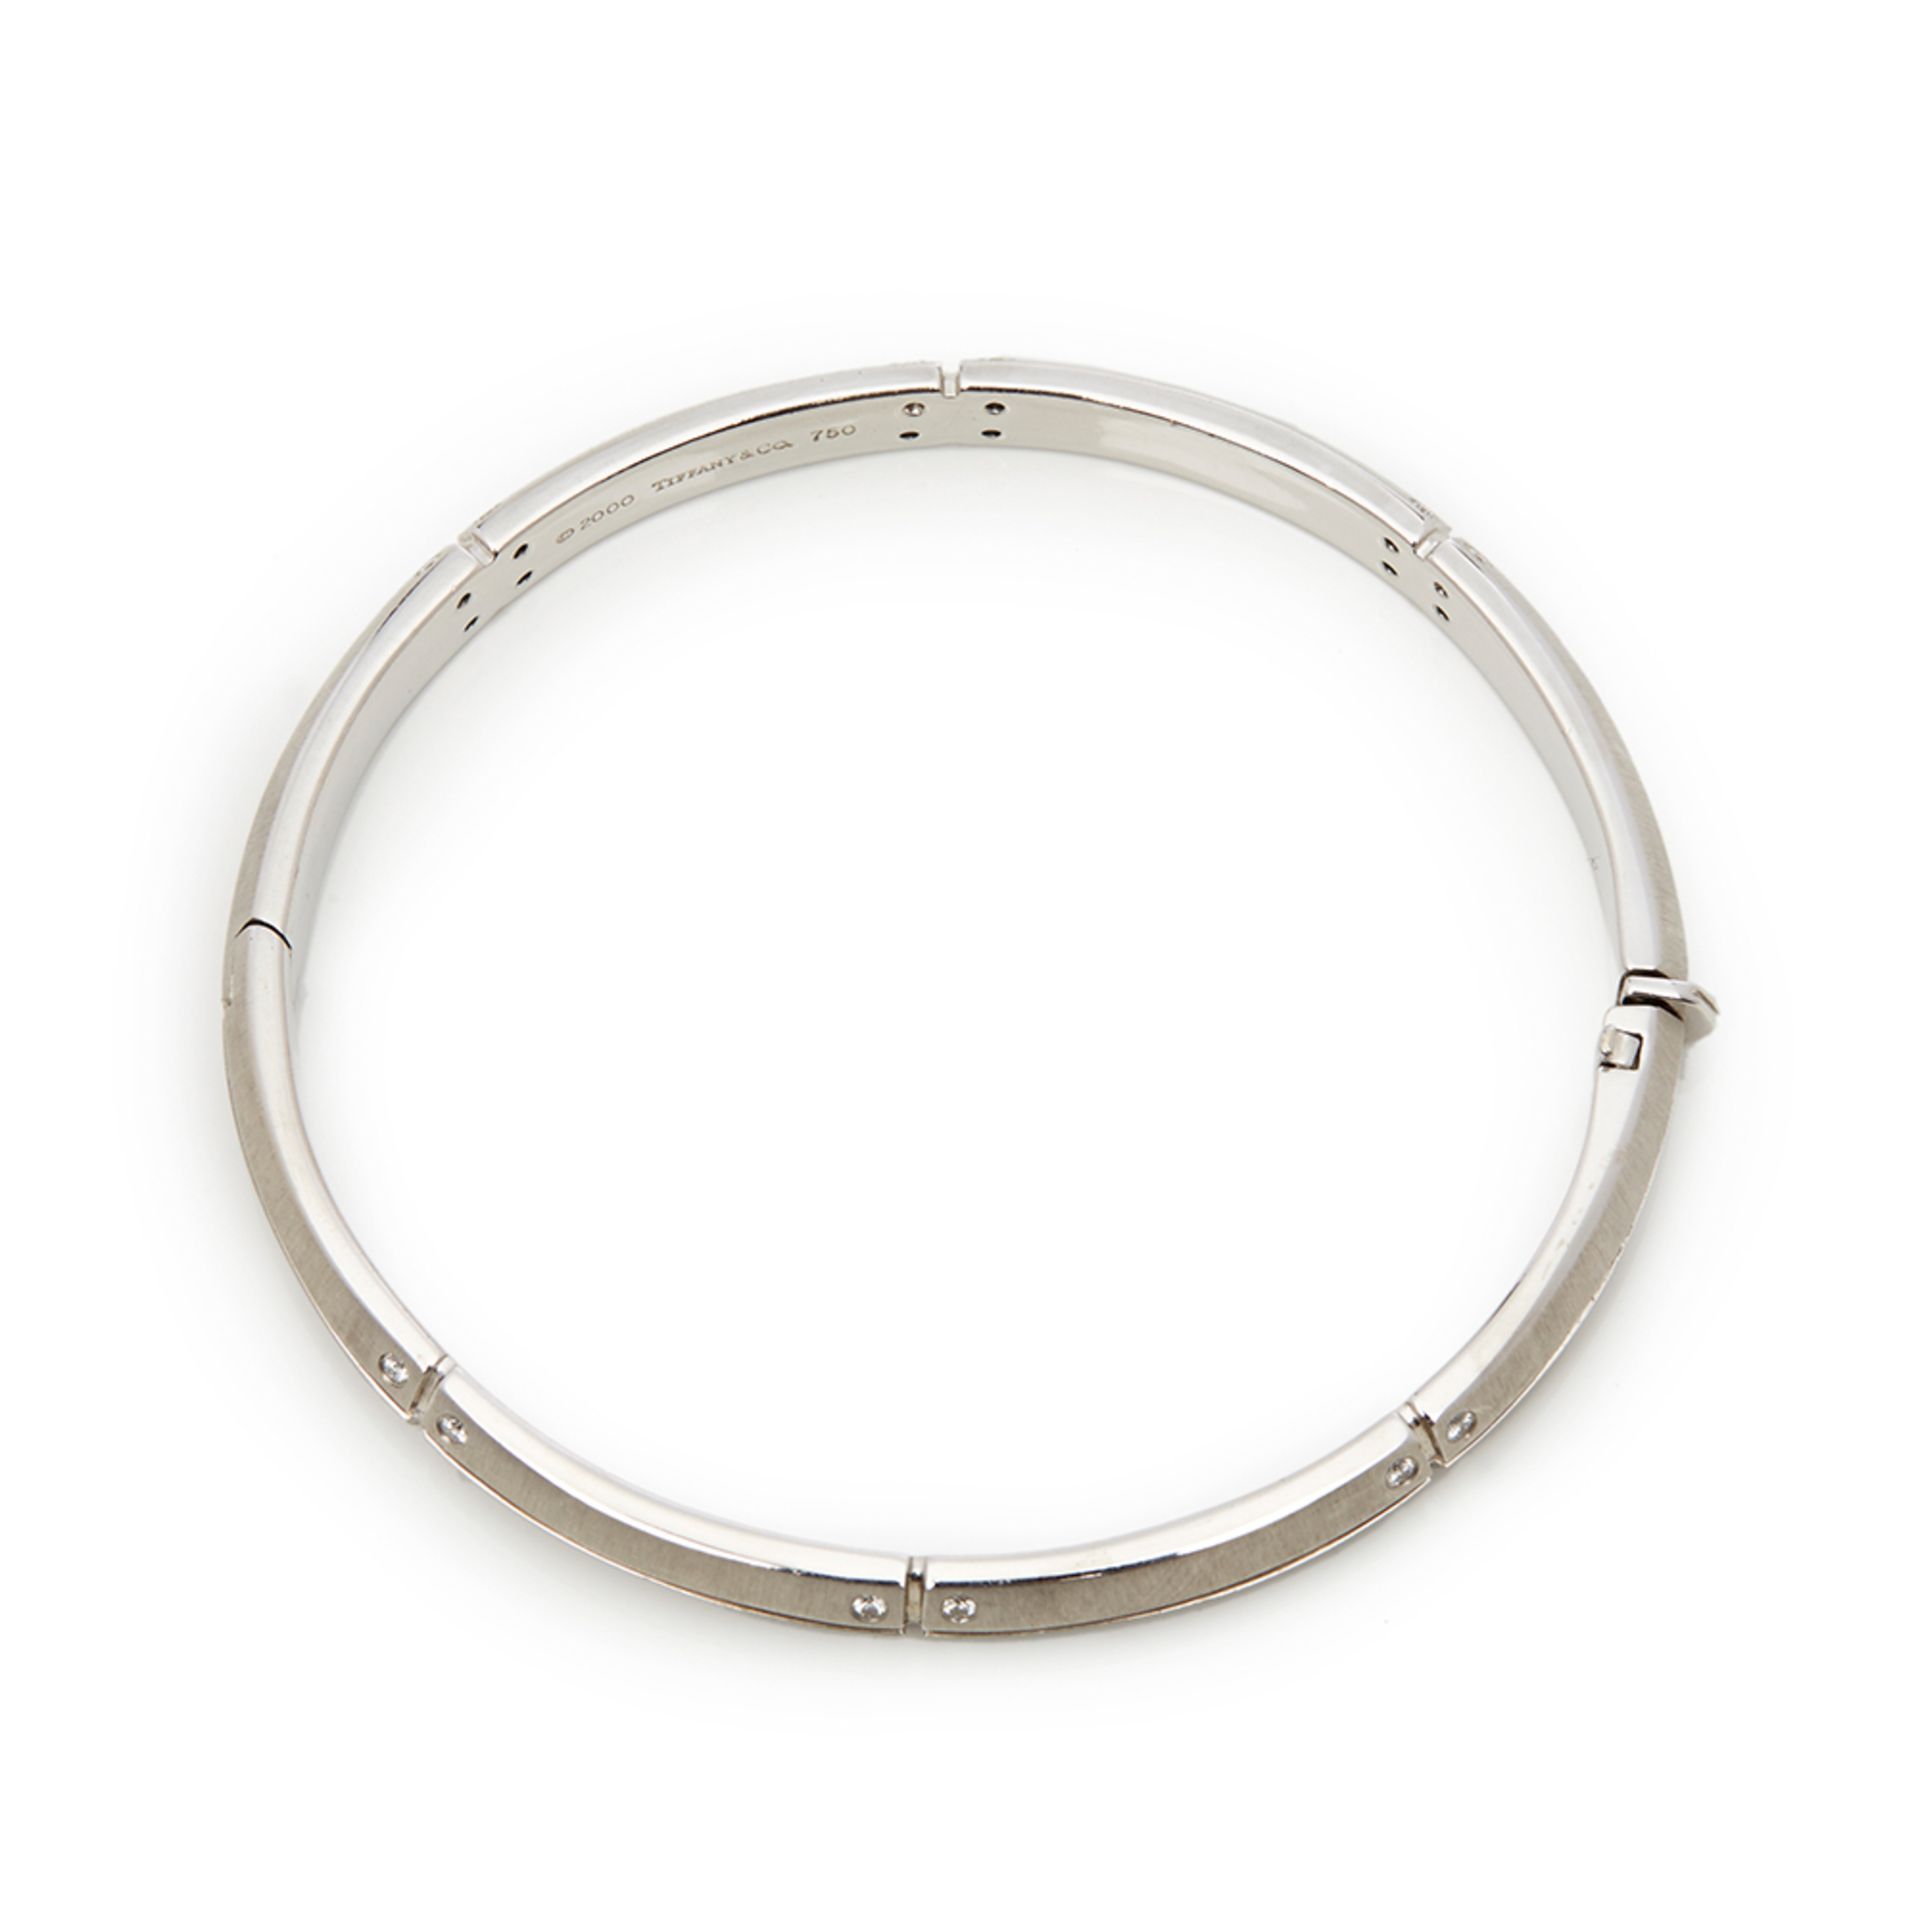 Tiffany & Co. 18k White Gold Diamond Streamerica Bracelet - Image 7 of 7